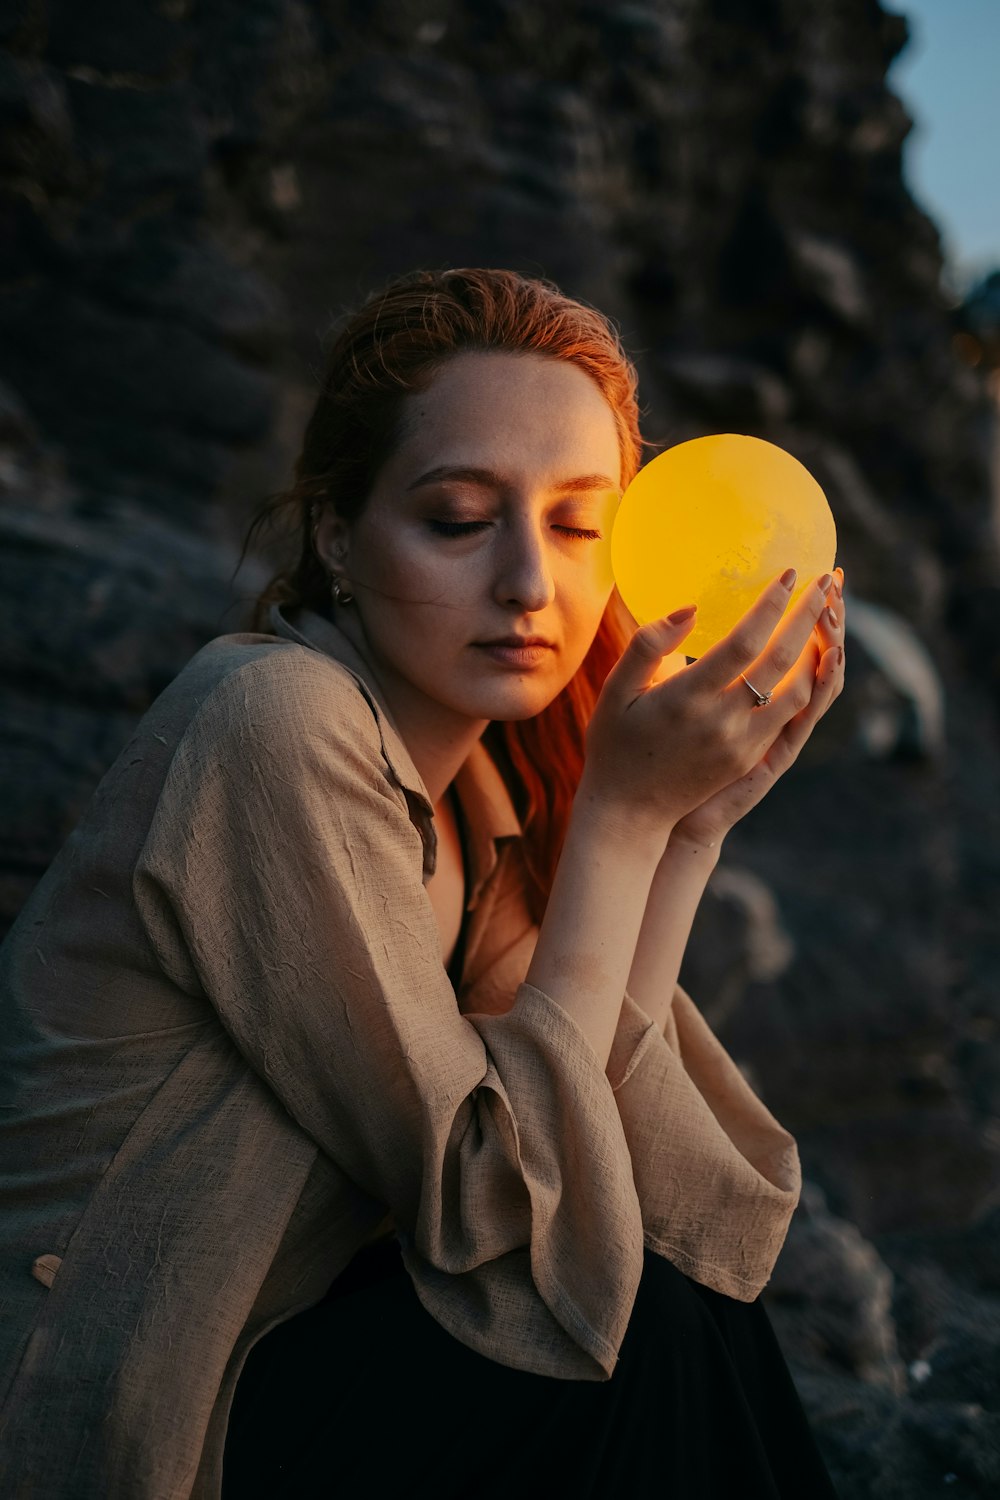 a person holding a yellow balloon